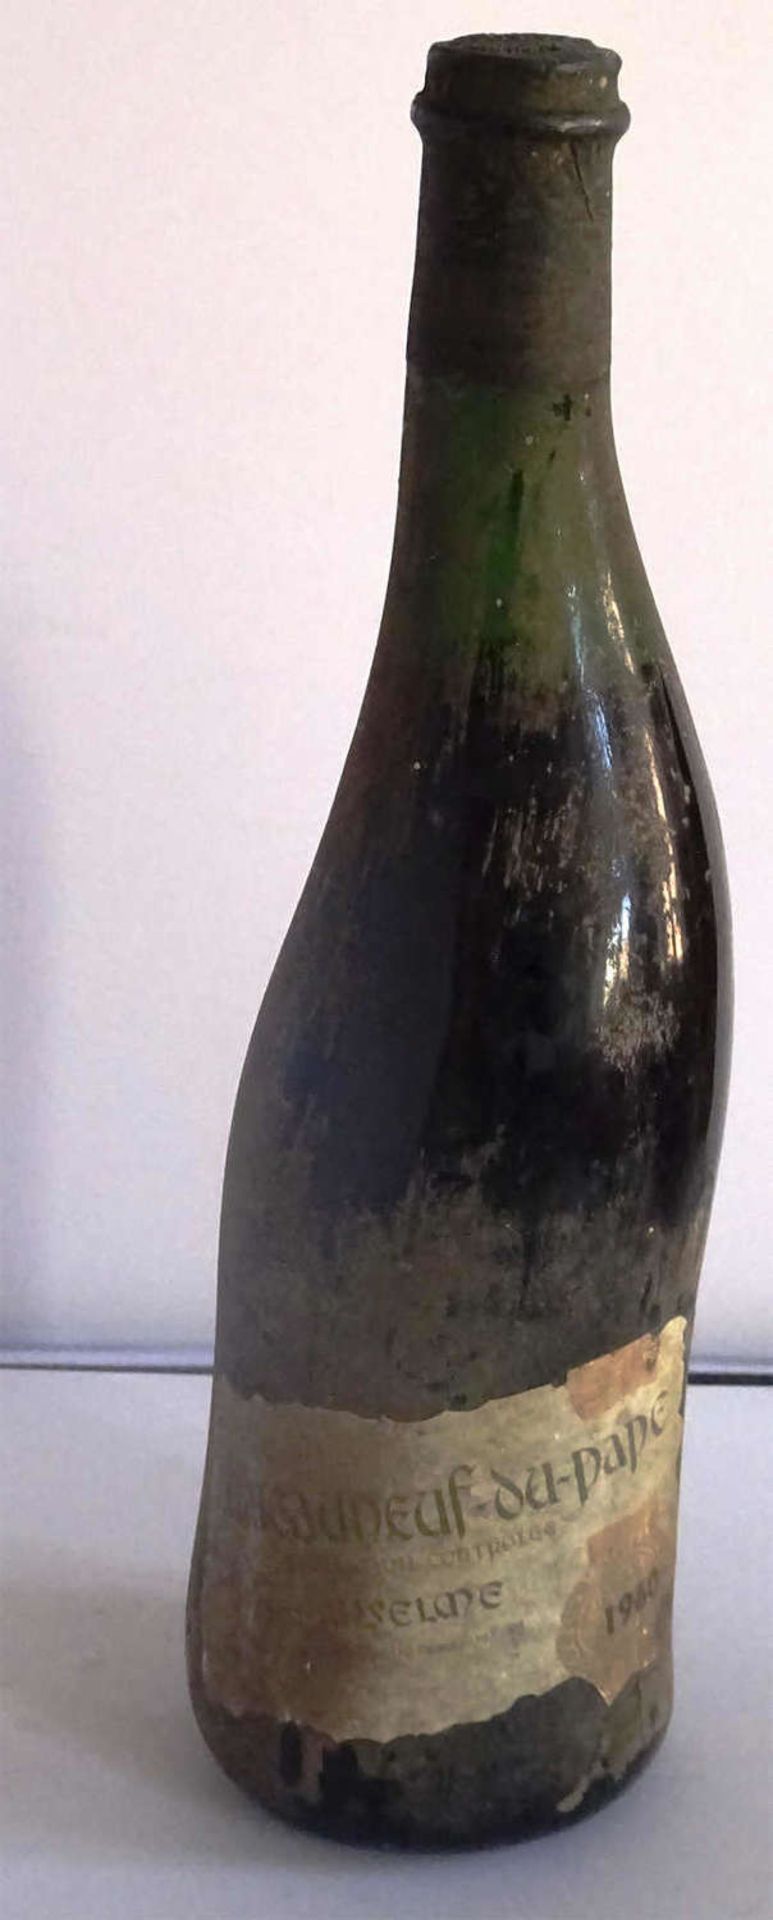 1 Flasche Chateauneuf du Pape 19601 bottle of Chateauneuf du Pape 1960